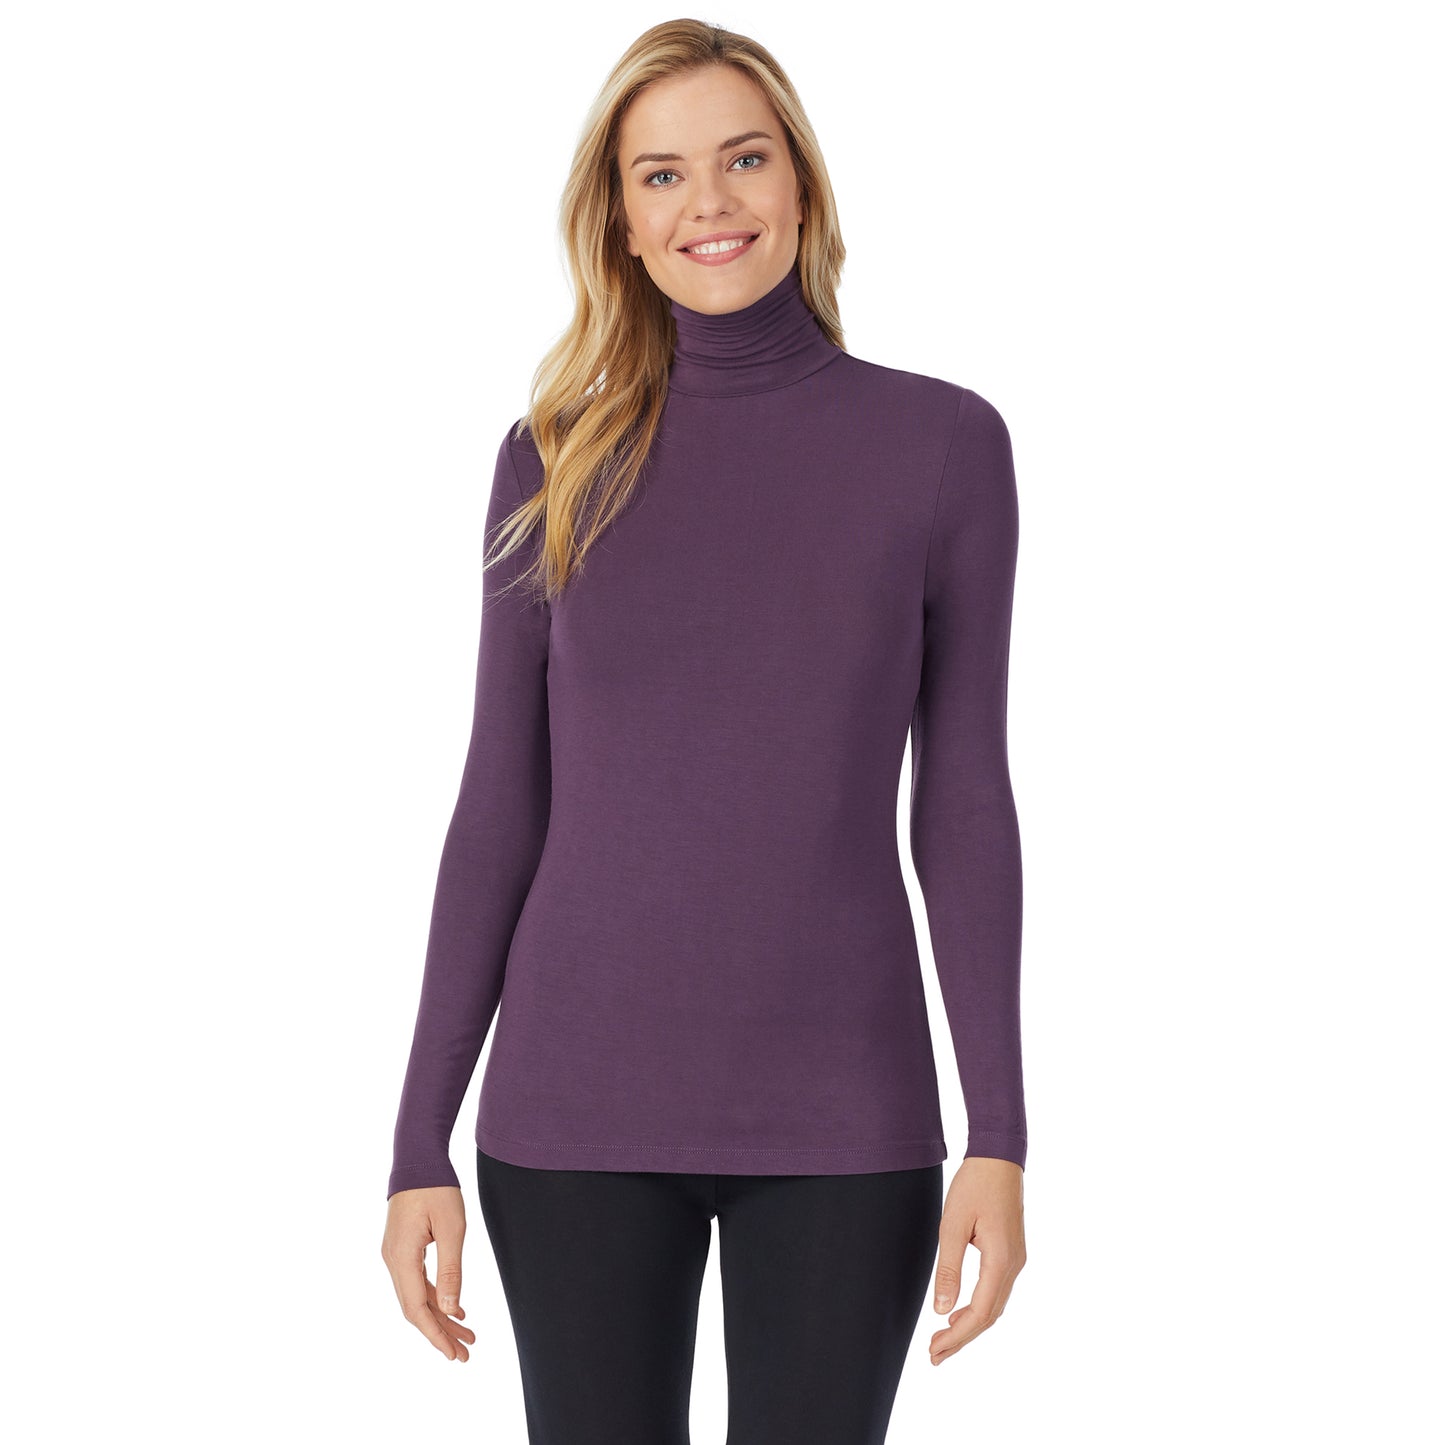 Boysenberry Purple;Model is wearing size S. She is 5’10”, Bust 34”, Waist 26", Hips 38”.@A lady wearing softwear with stretch long sleeve turtleneck